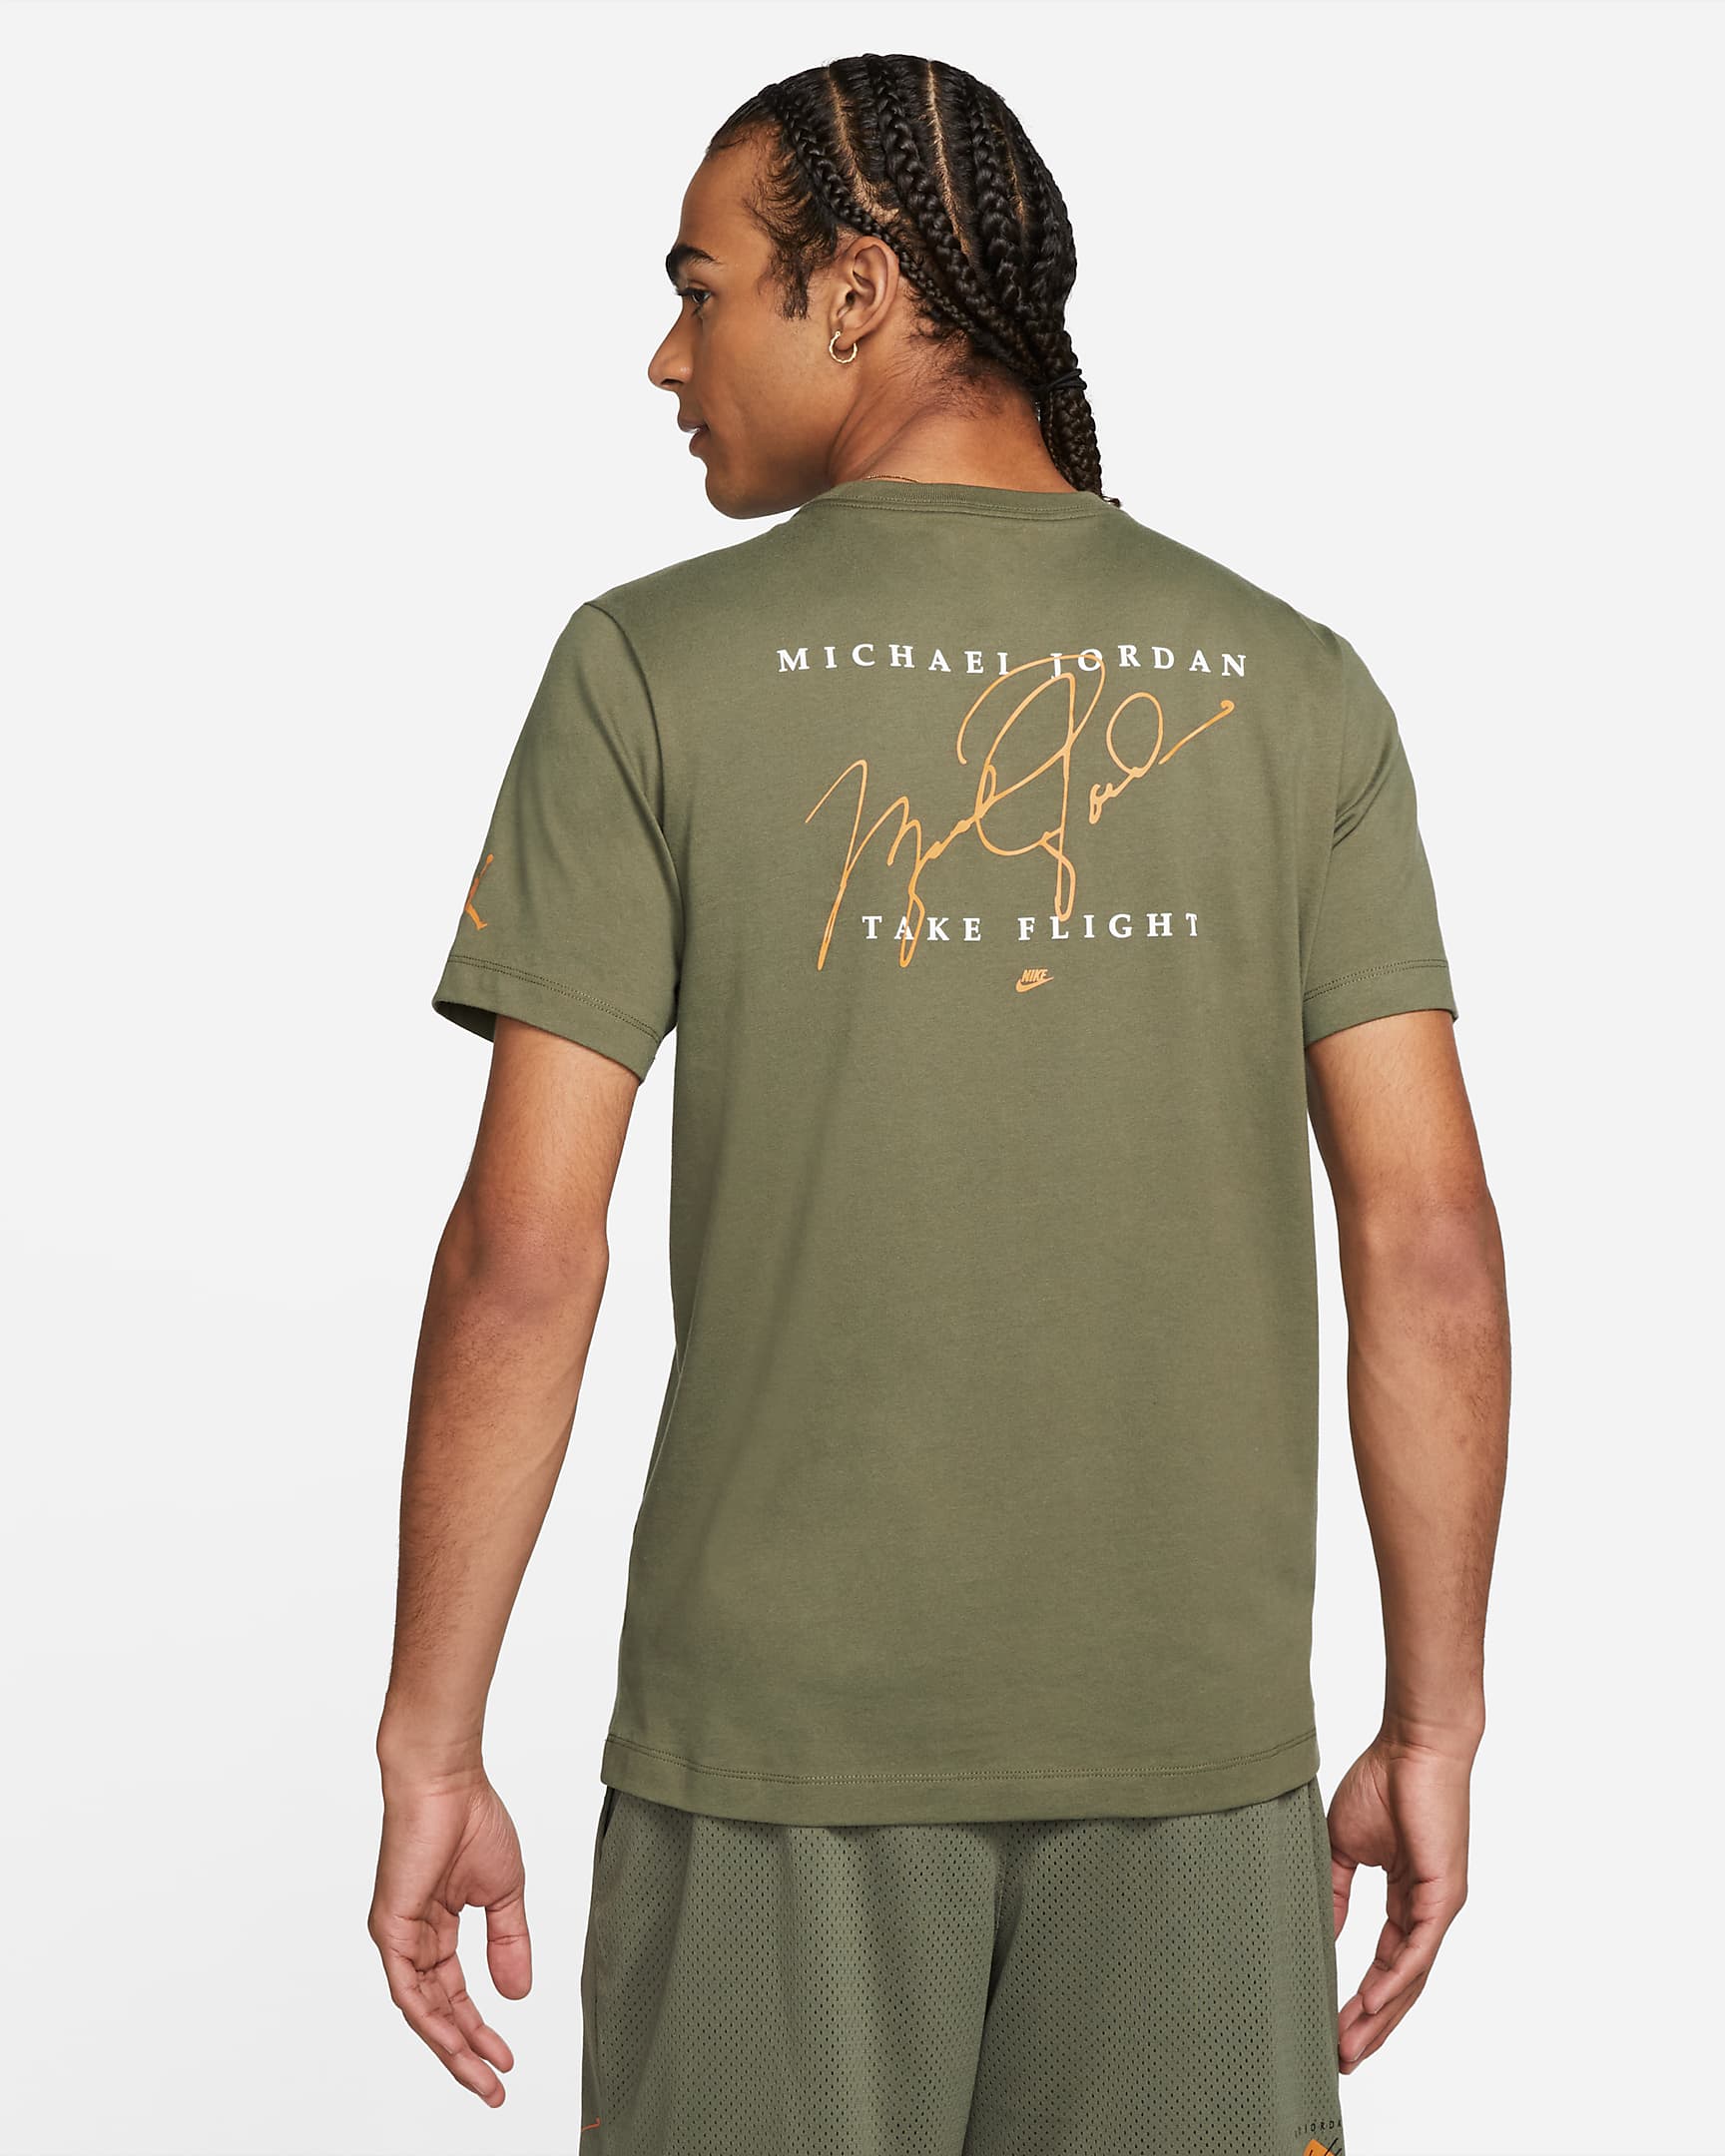 New Jordan Shirts Clothing Bag Releases on January 7 2022